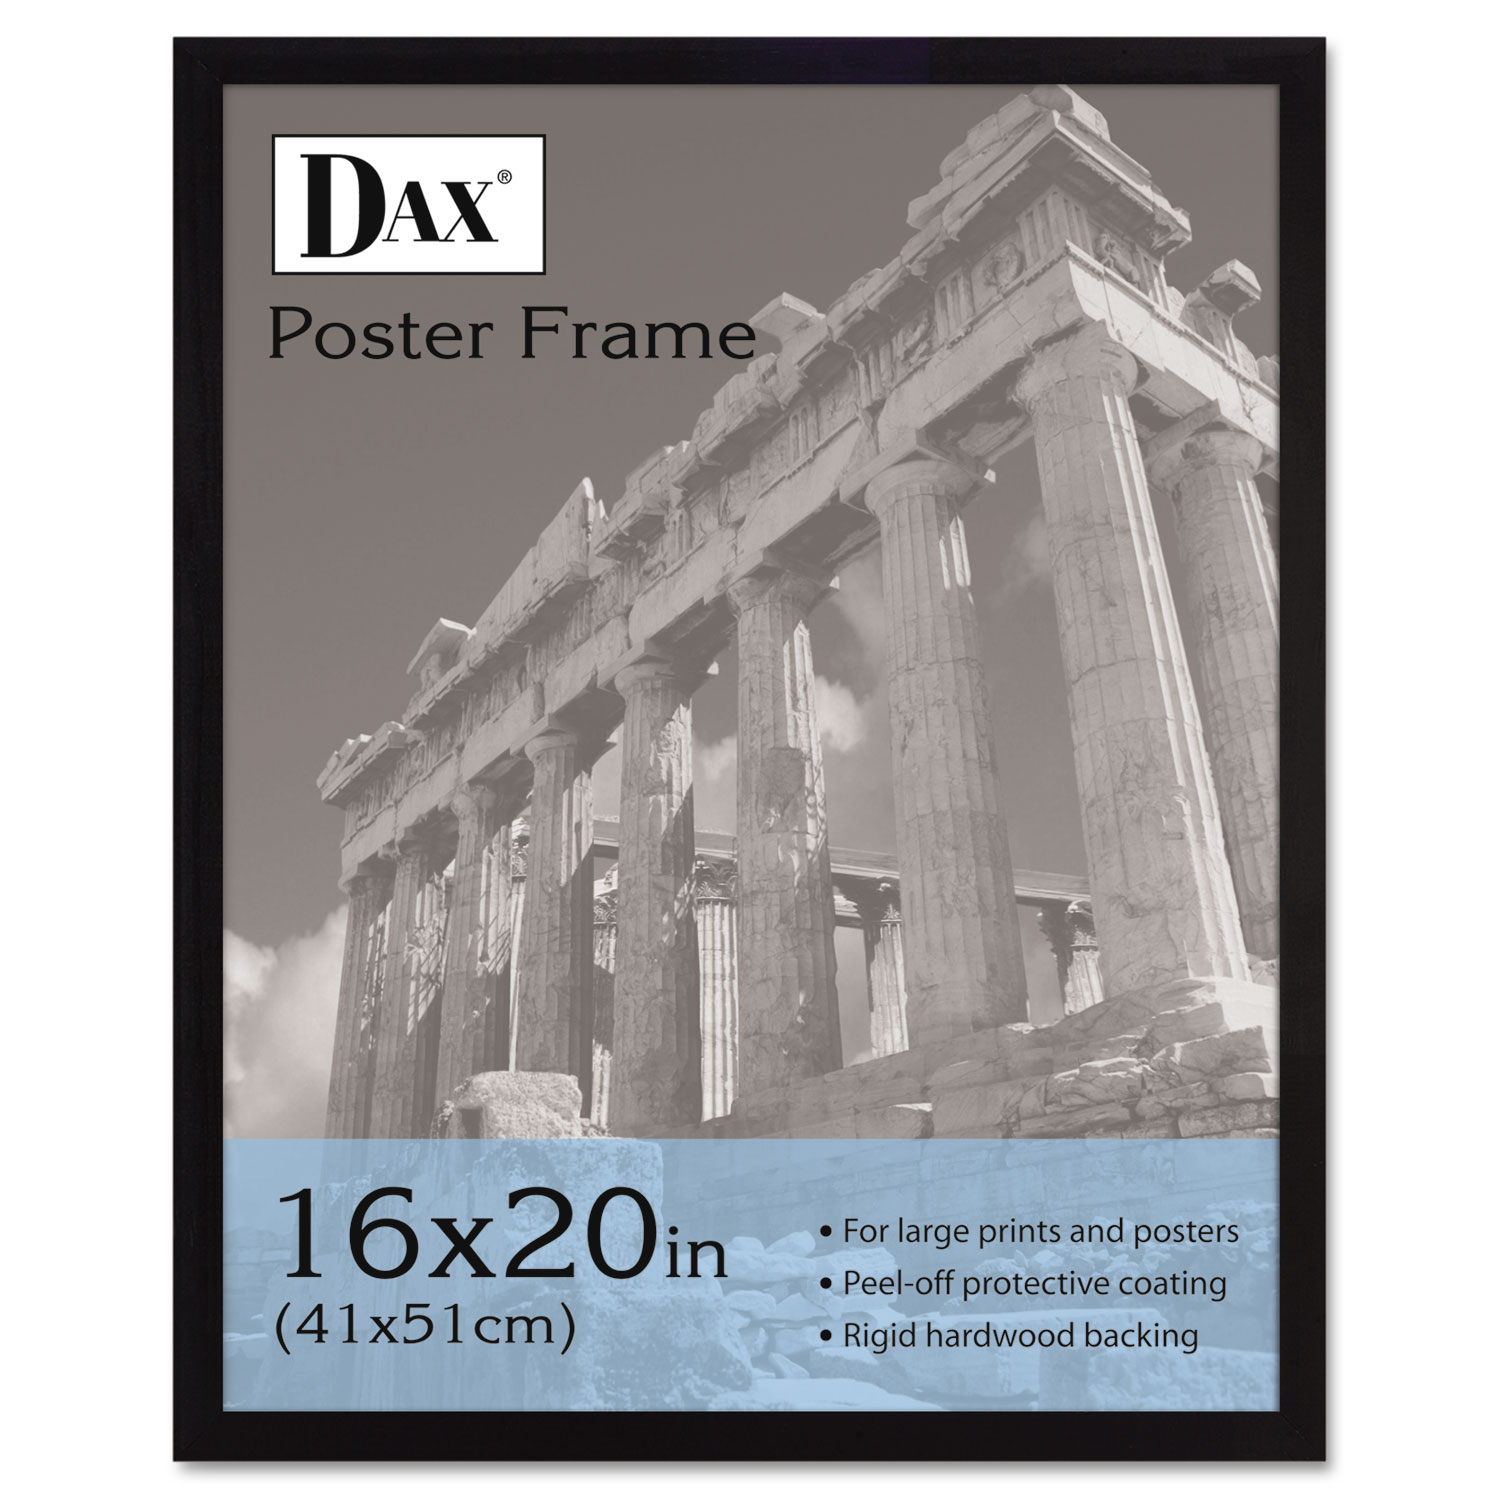  DAX 2860V2X Flat Face Wood Poster Frame, Clear Plastic Window, 16 x 20, Black Border (DAX2860V2X) 